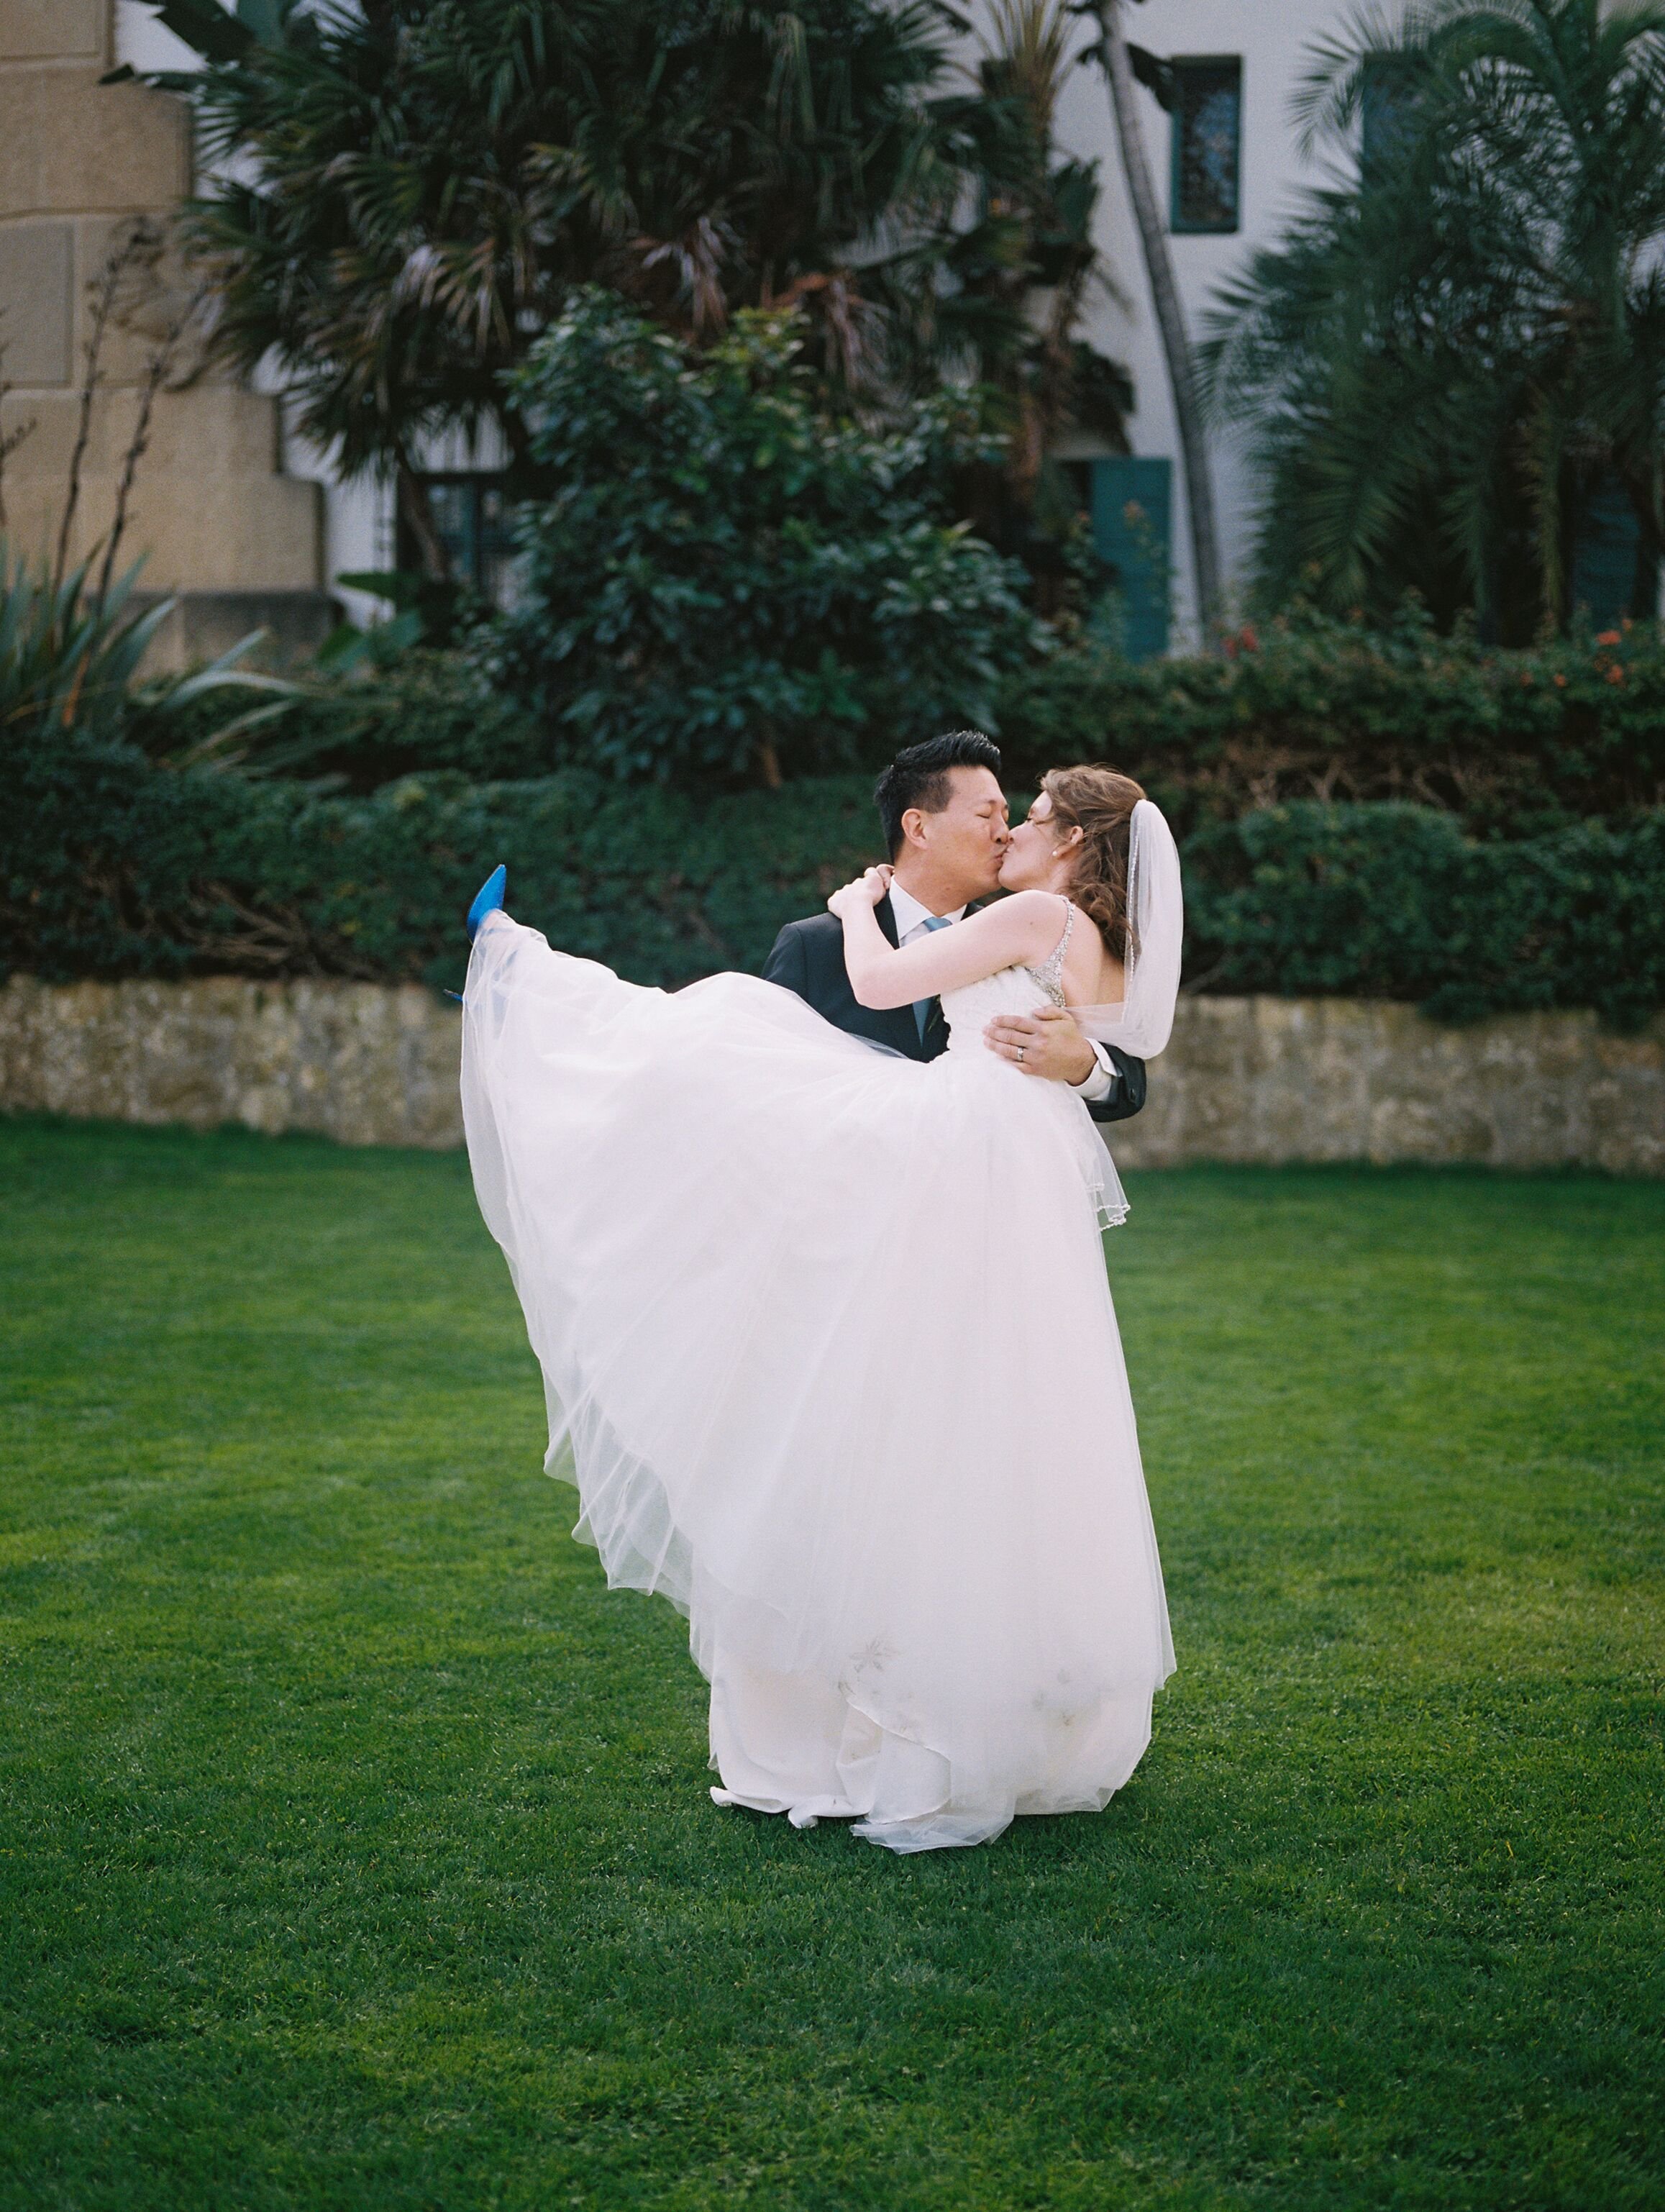 www.santabarbawedding.com | Venue: Santa Barbara Courthouse | Photography: Ryanne Bee Photography | Officiant: Santa Barbara Classic Weddings | Bride and Groom Romantic Kiss